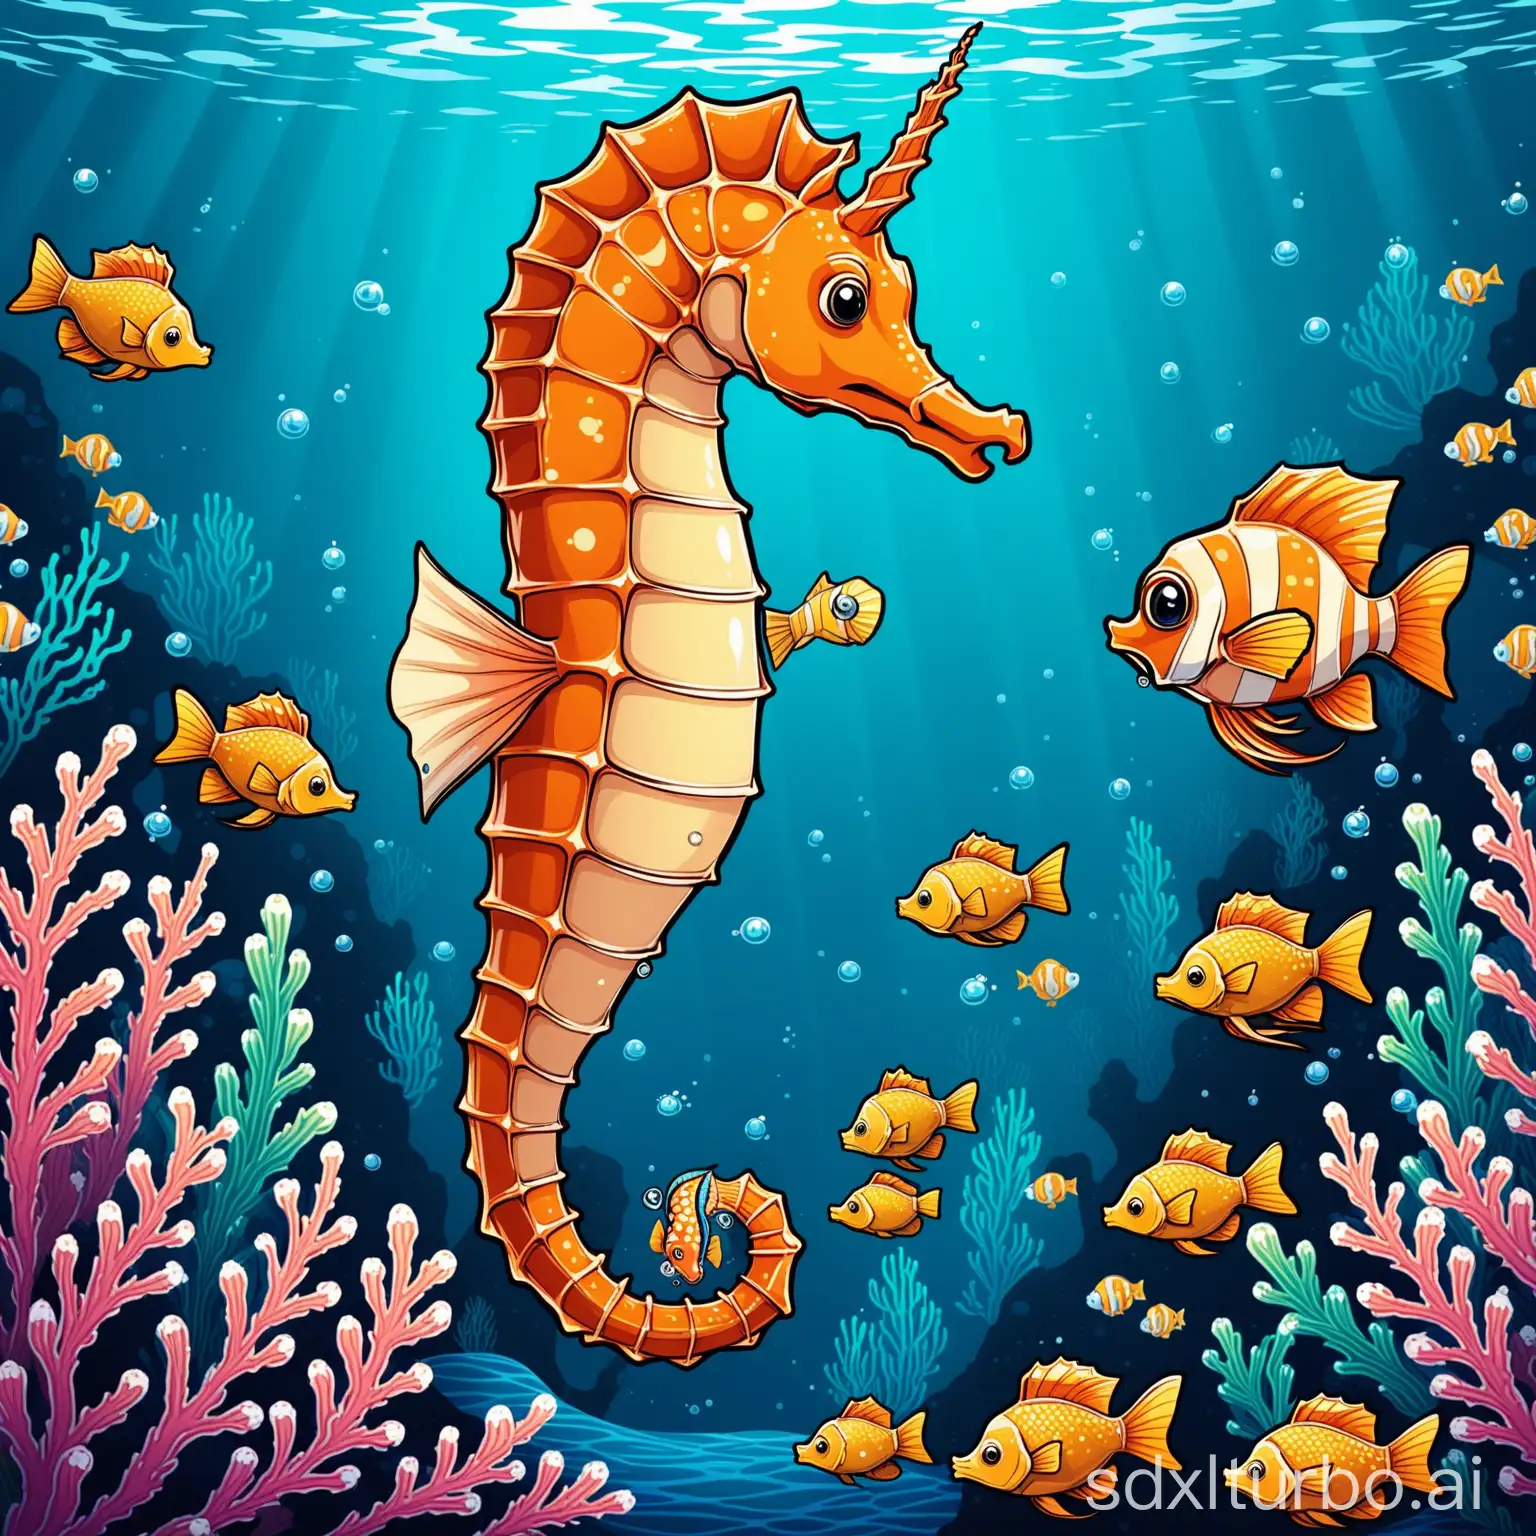 A seahorse facing a fish, deep sea, cartoon style,